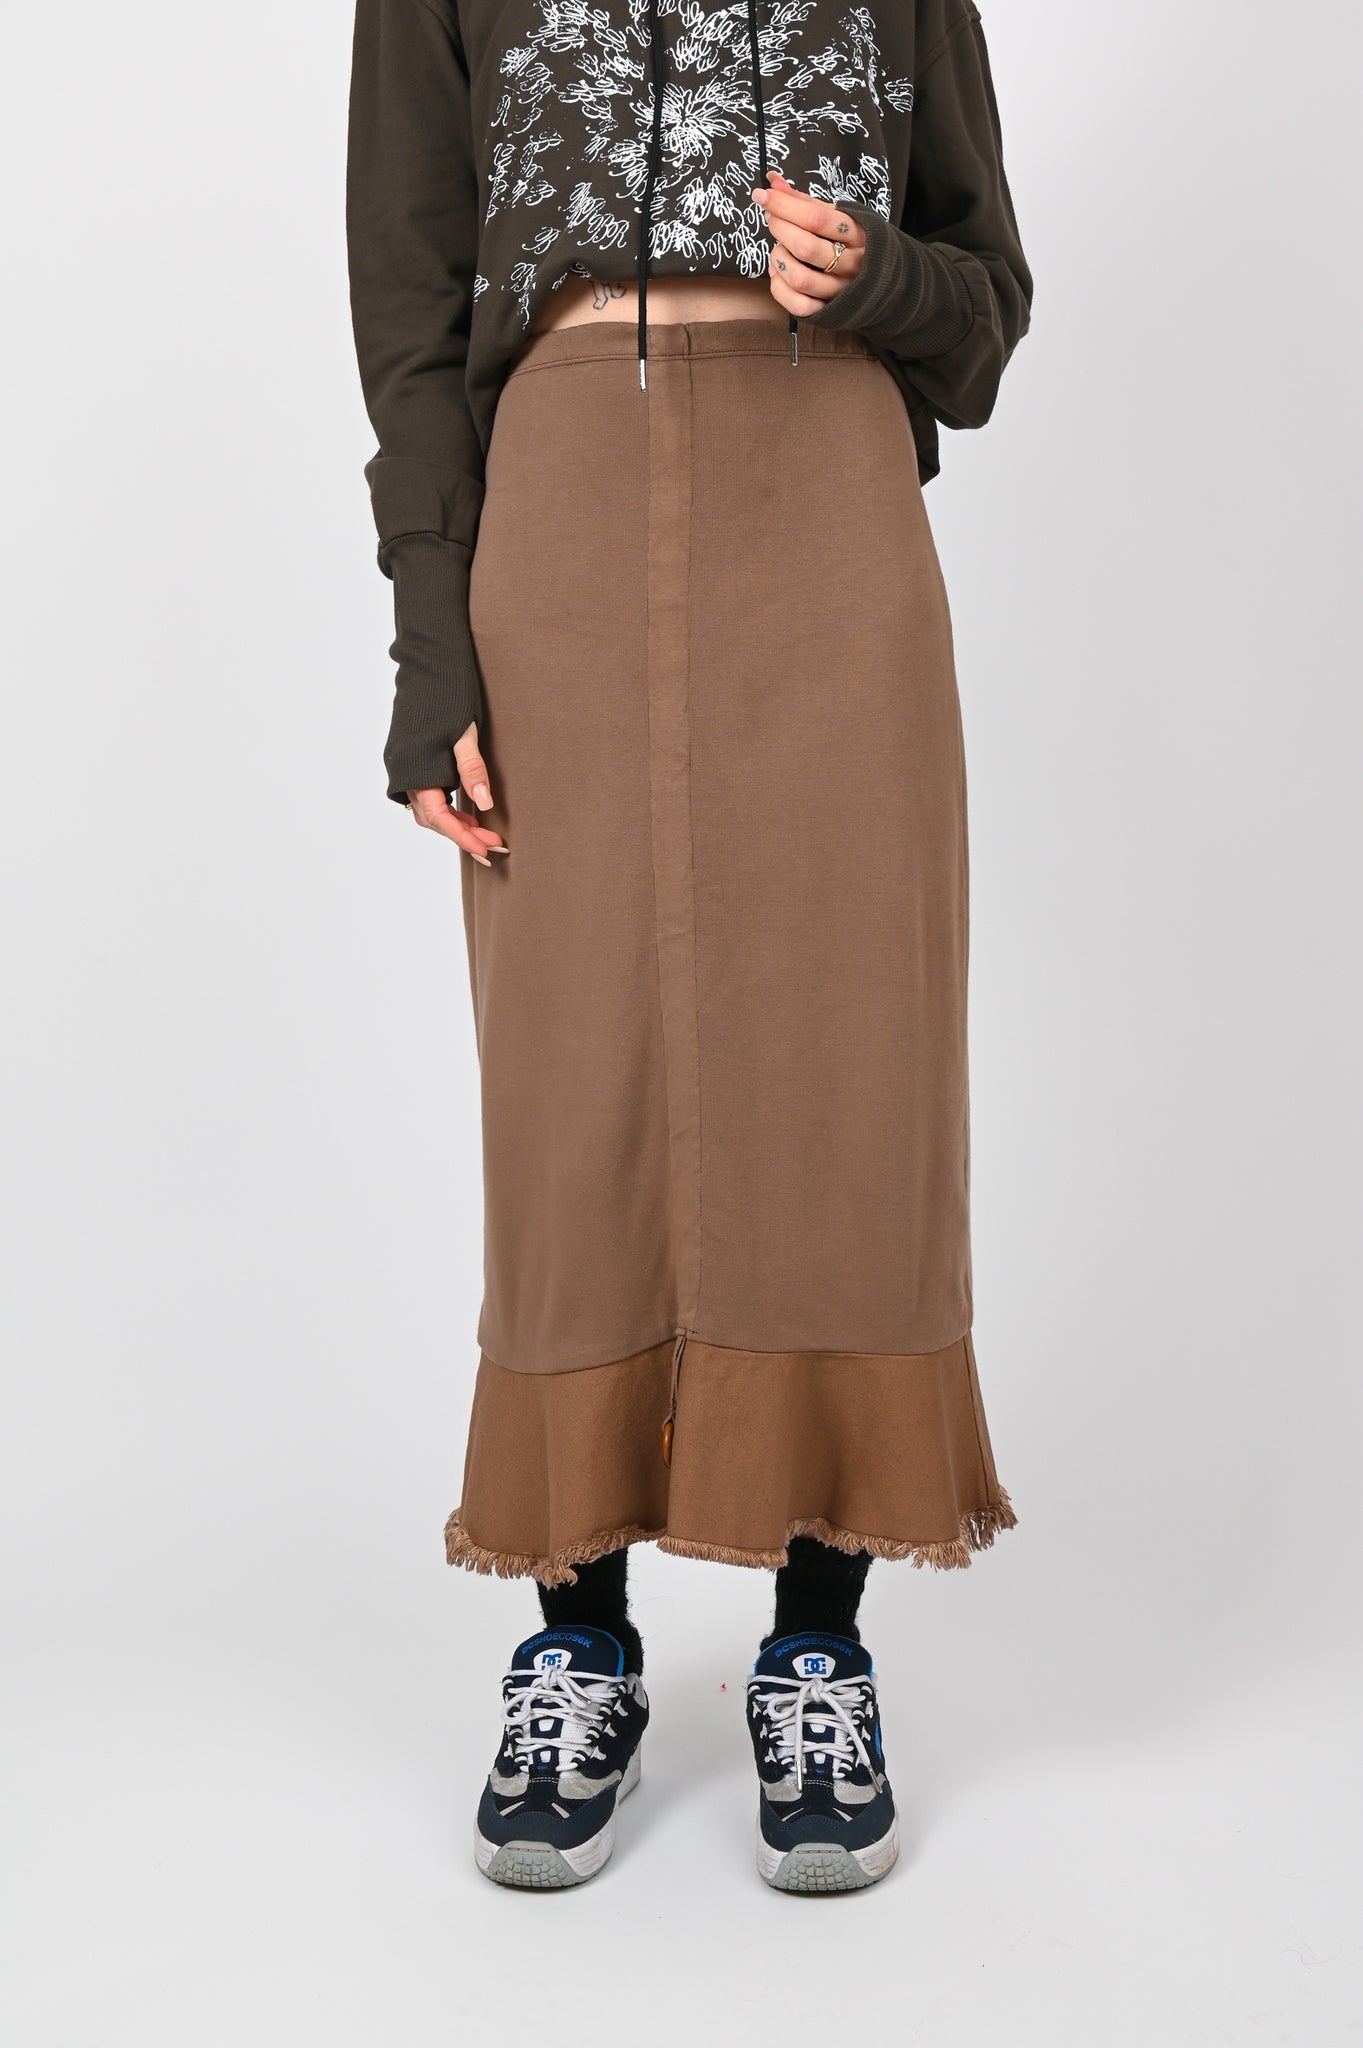 BRB 'Manipulation' Skirt In Brown